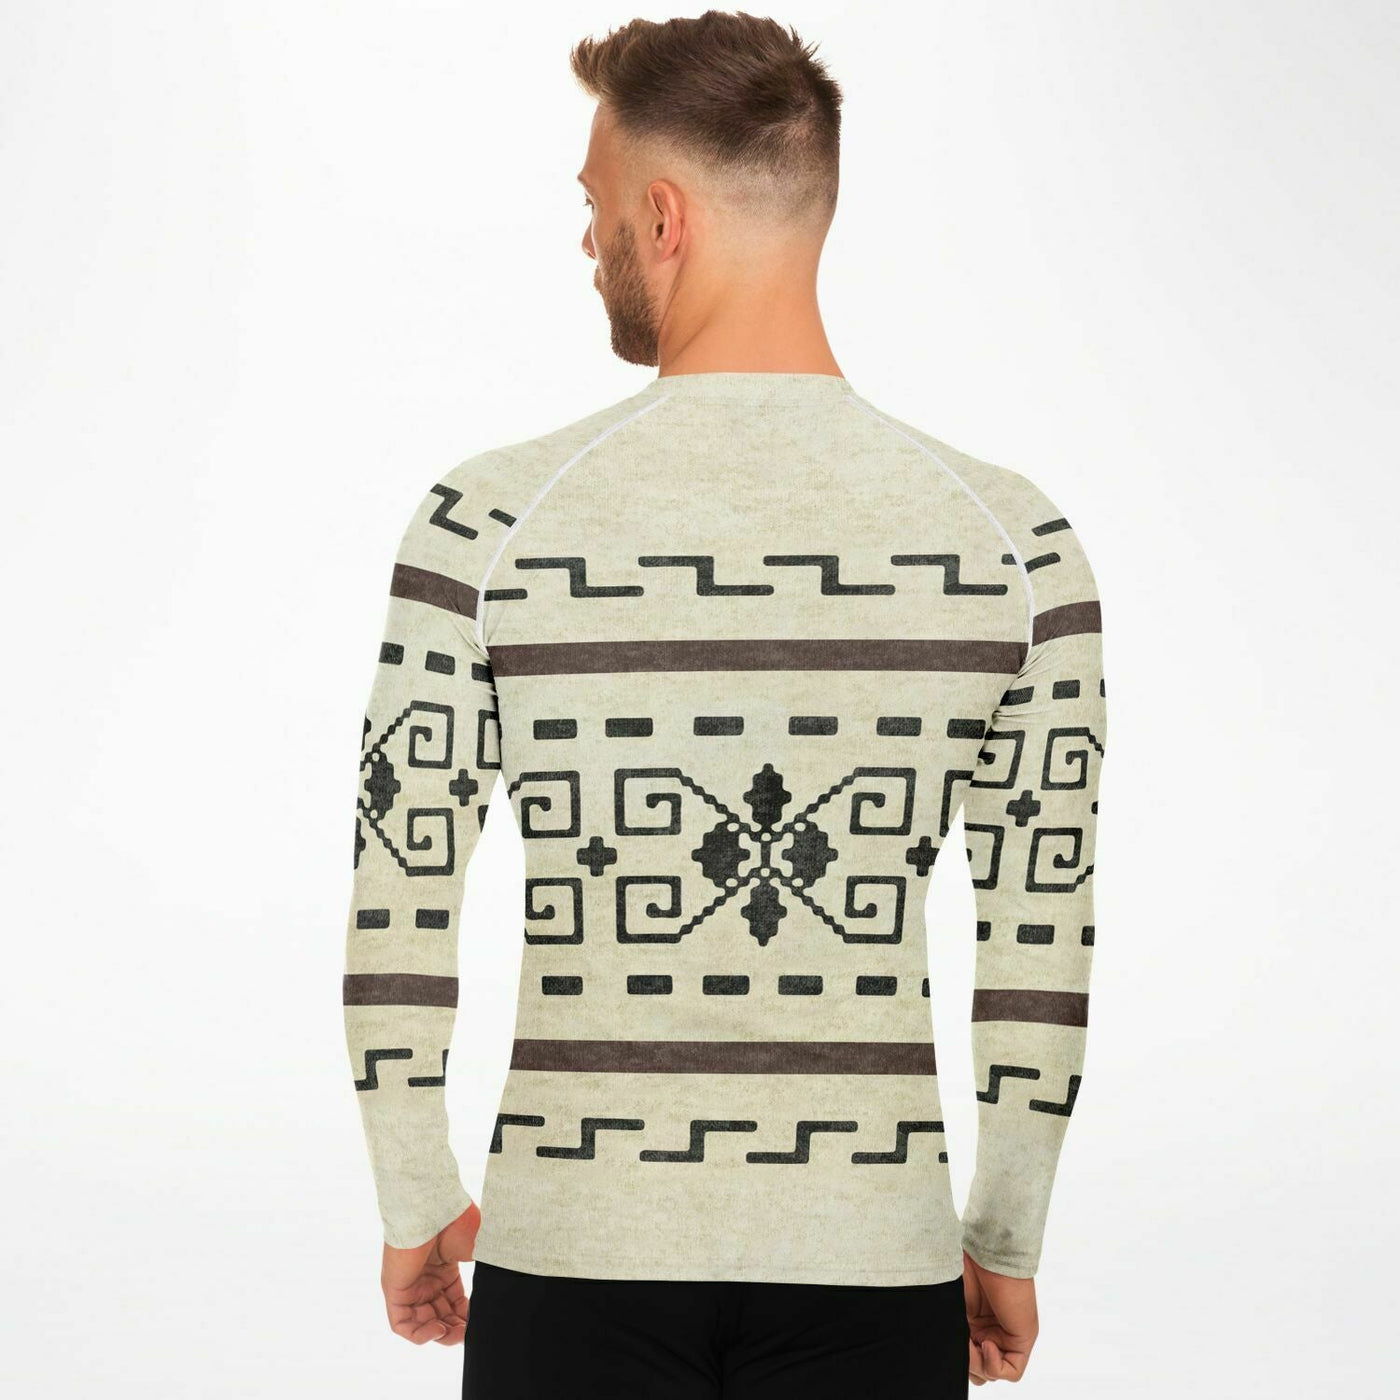 The Dude's Rashguard Surf Shirt W/ Iconic Big Lebowski Sweater Pattern